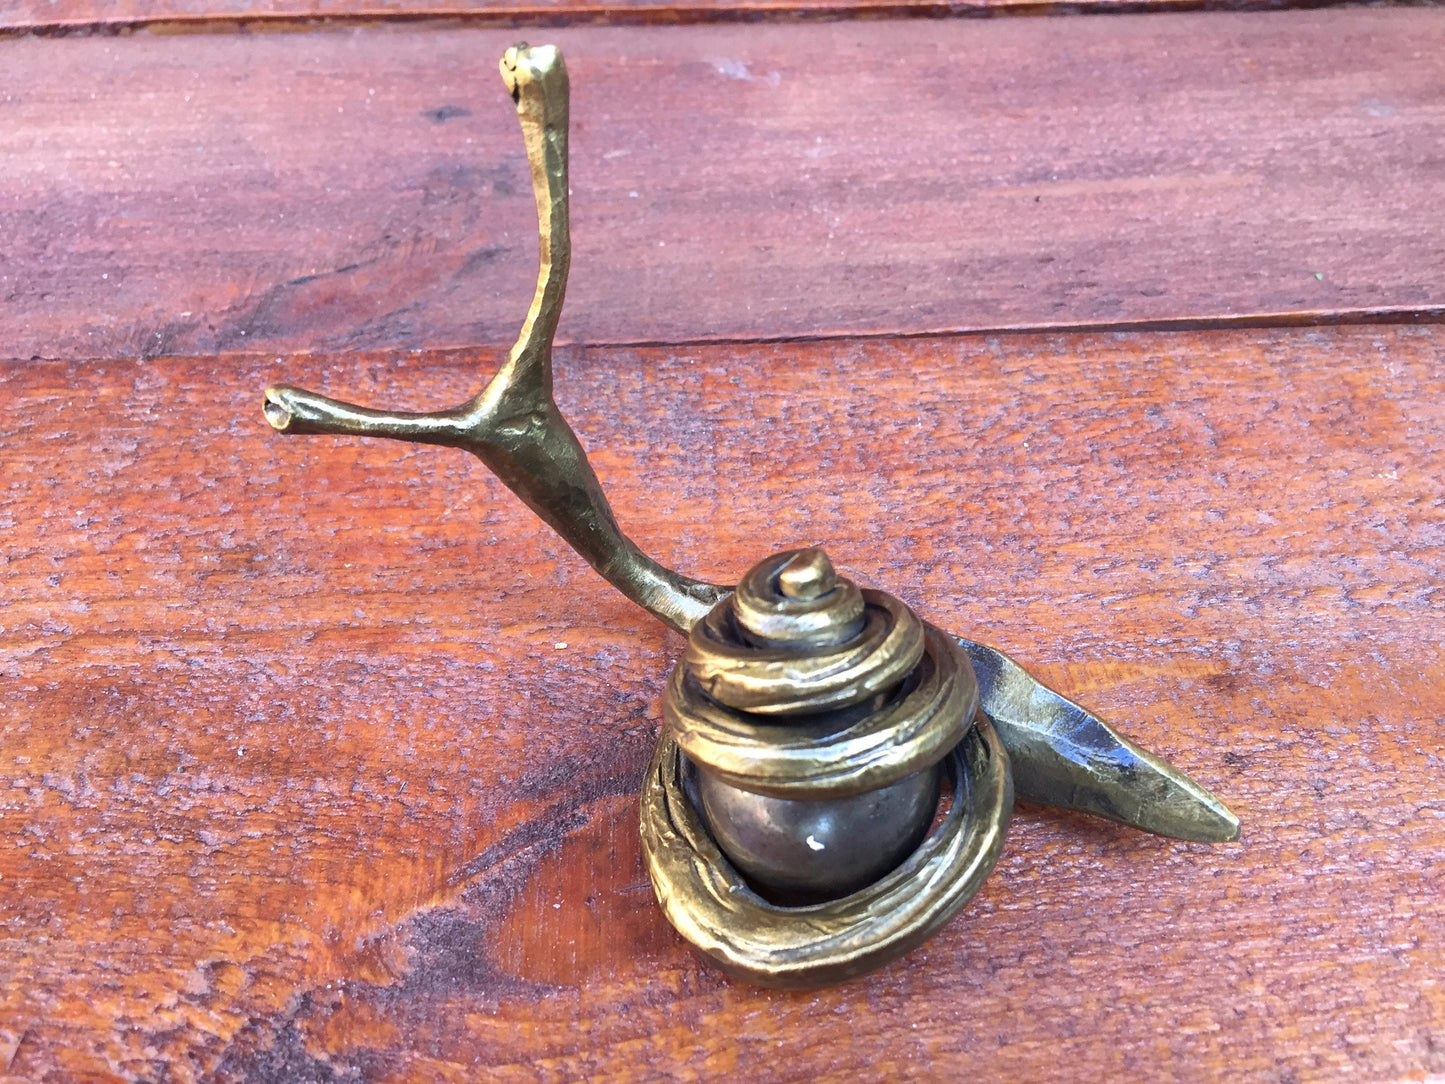 Bronze snail, 8th anniversary gift, 19th anniversary gift, bronze gift, bronze gift for her,bronze gift for him,8th anniversary gift for her